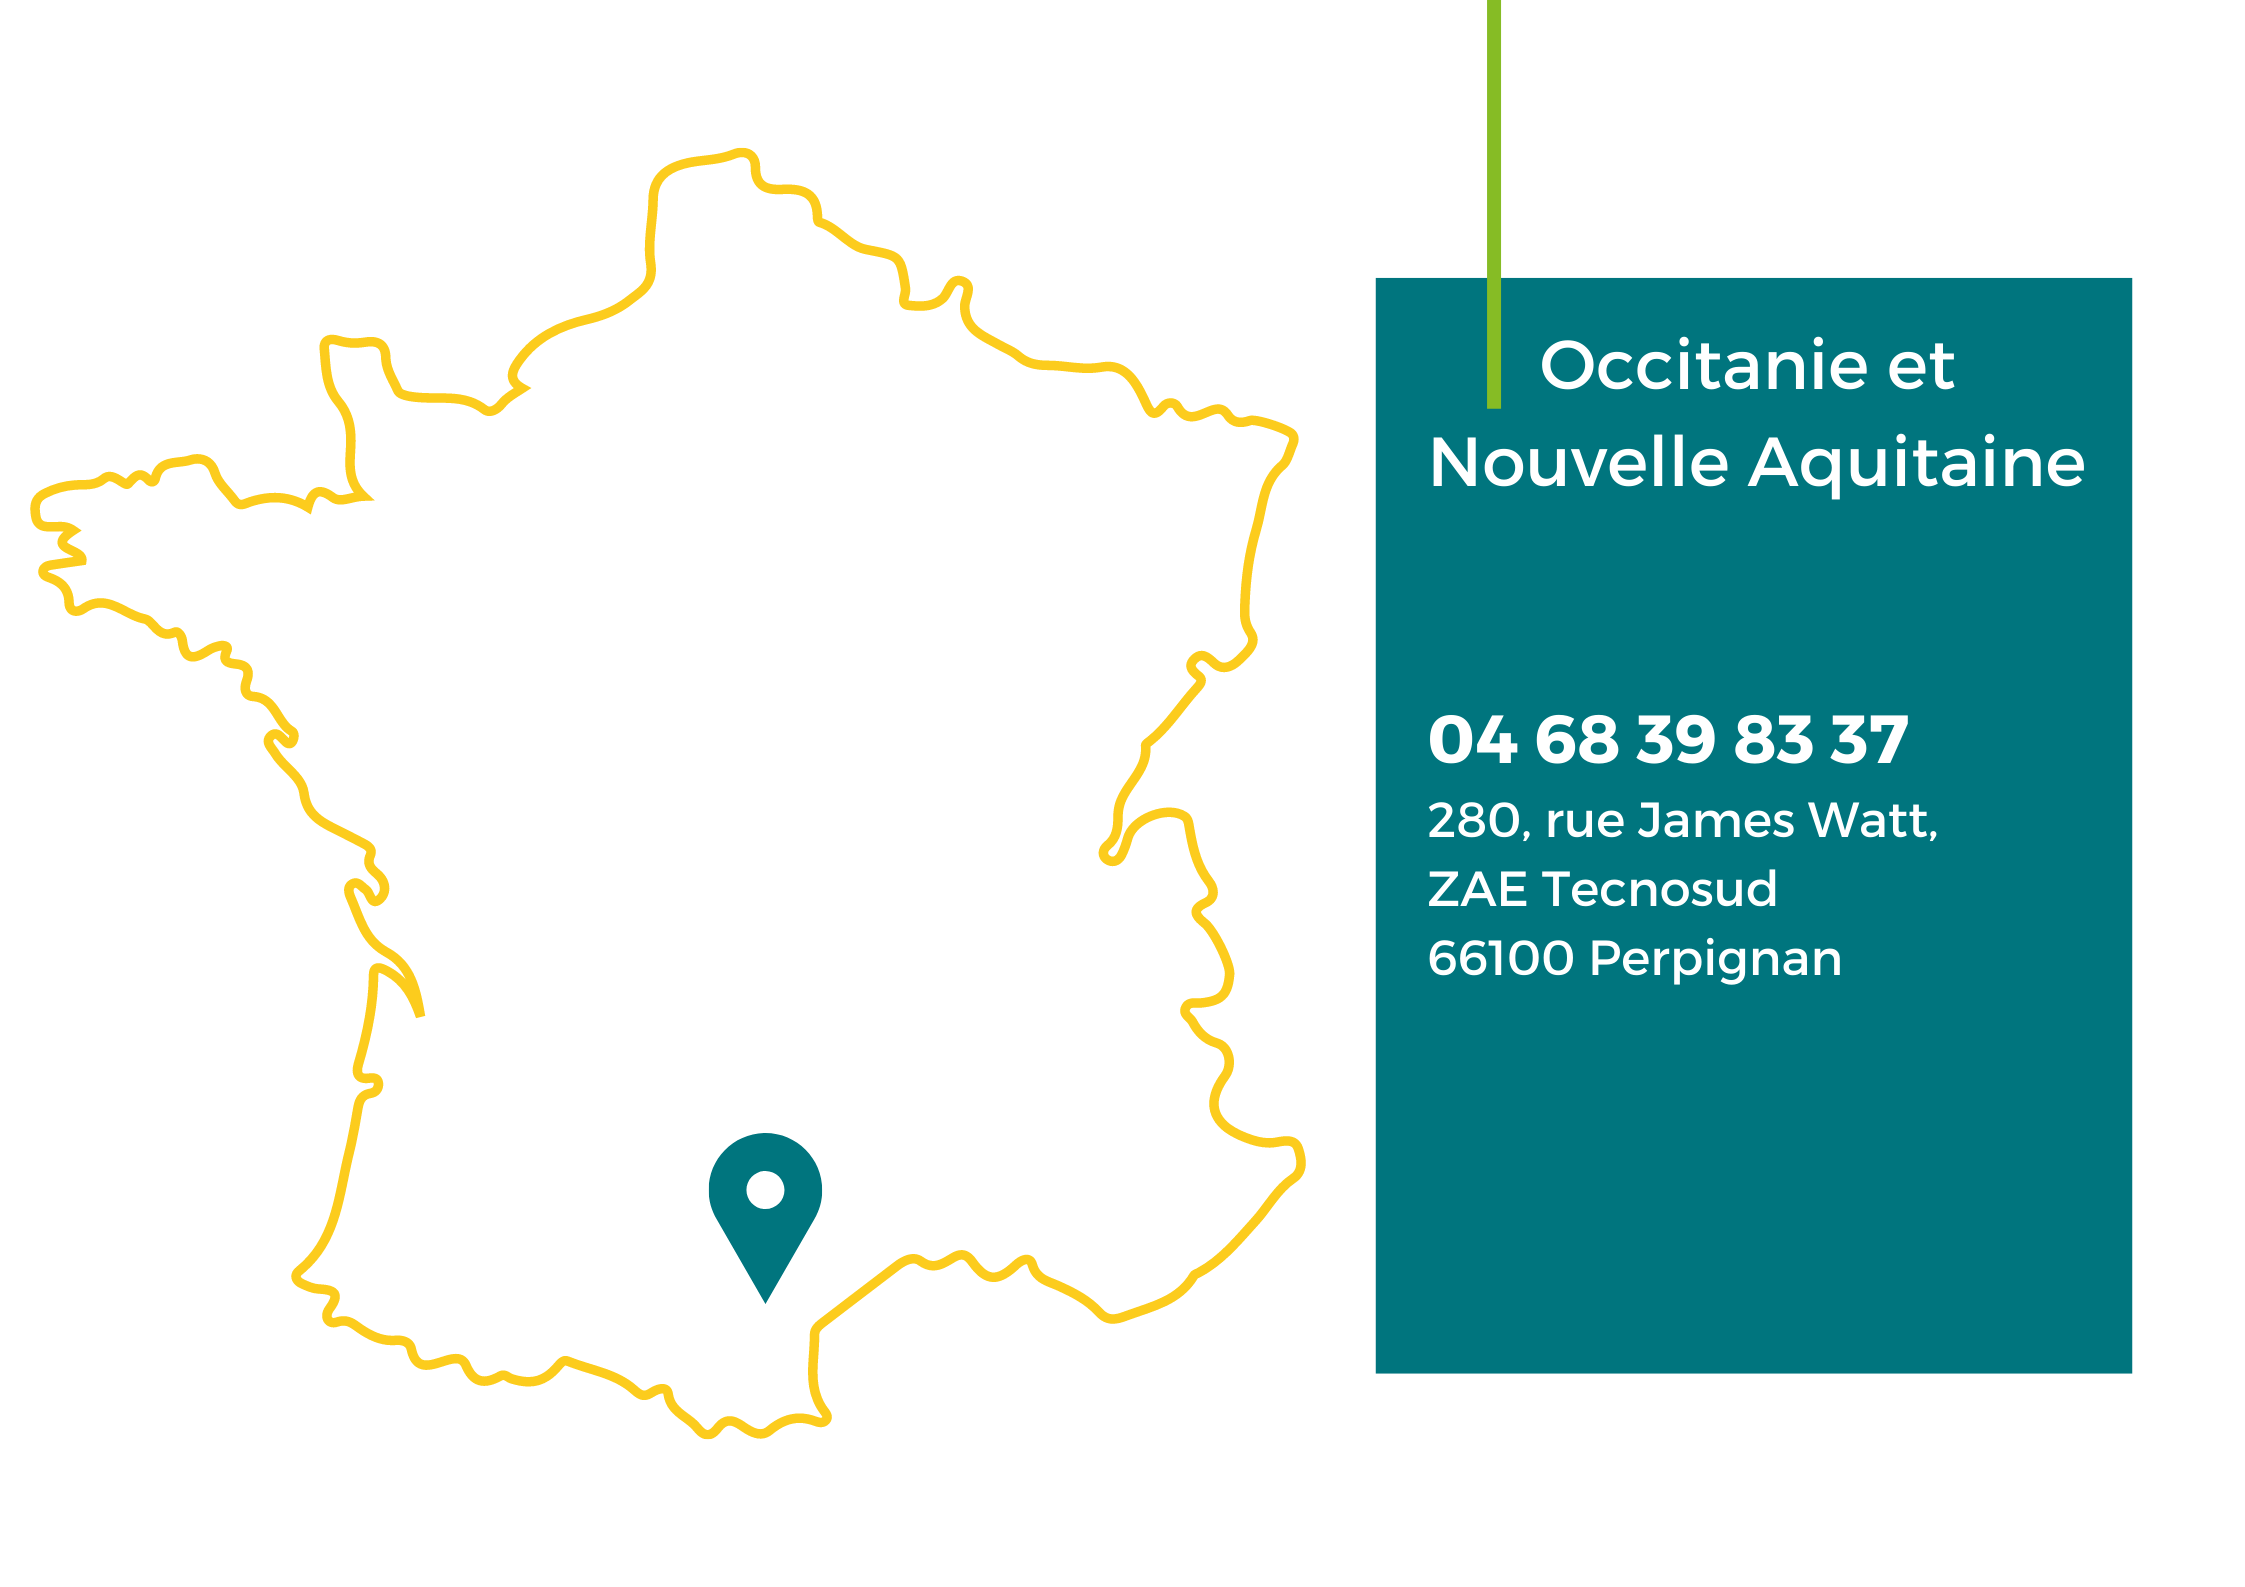 Contact Occitanie